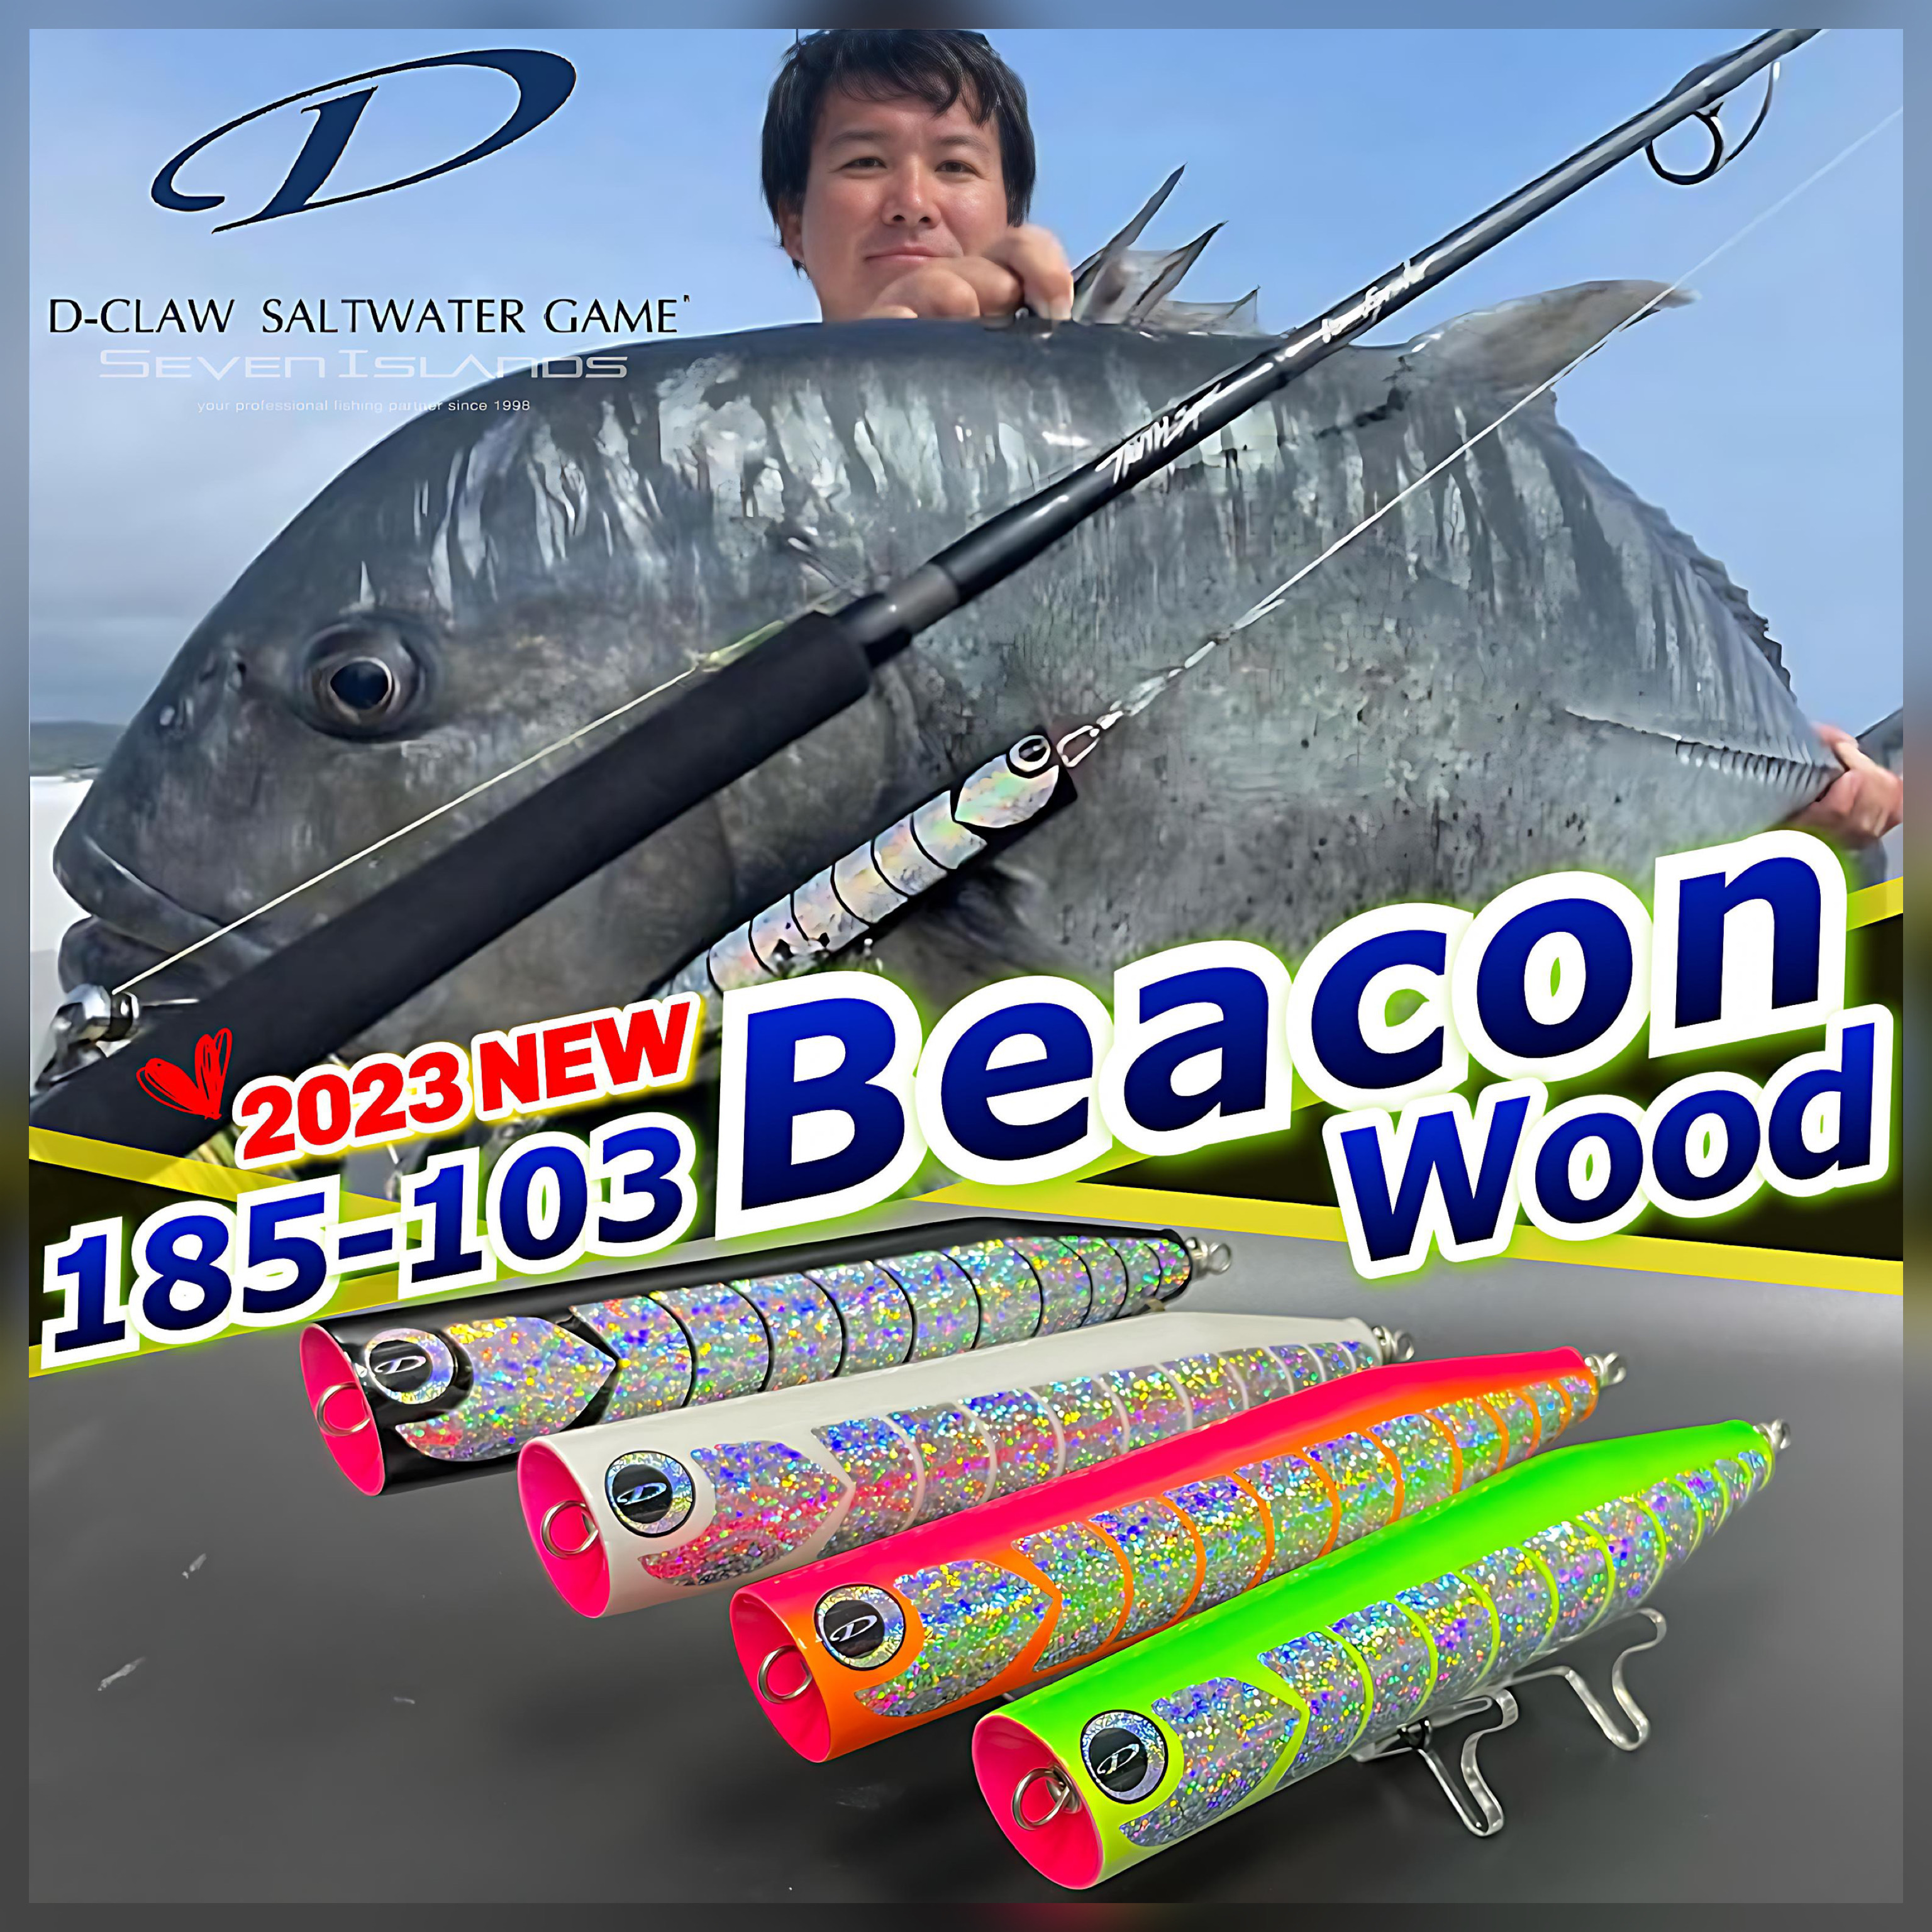 D-CLAW 23 BEACON 185-103 Wood Popper